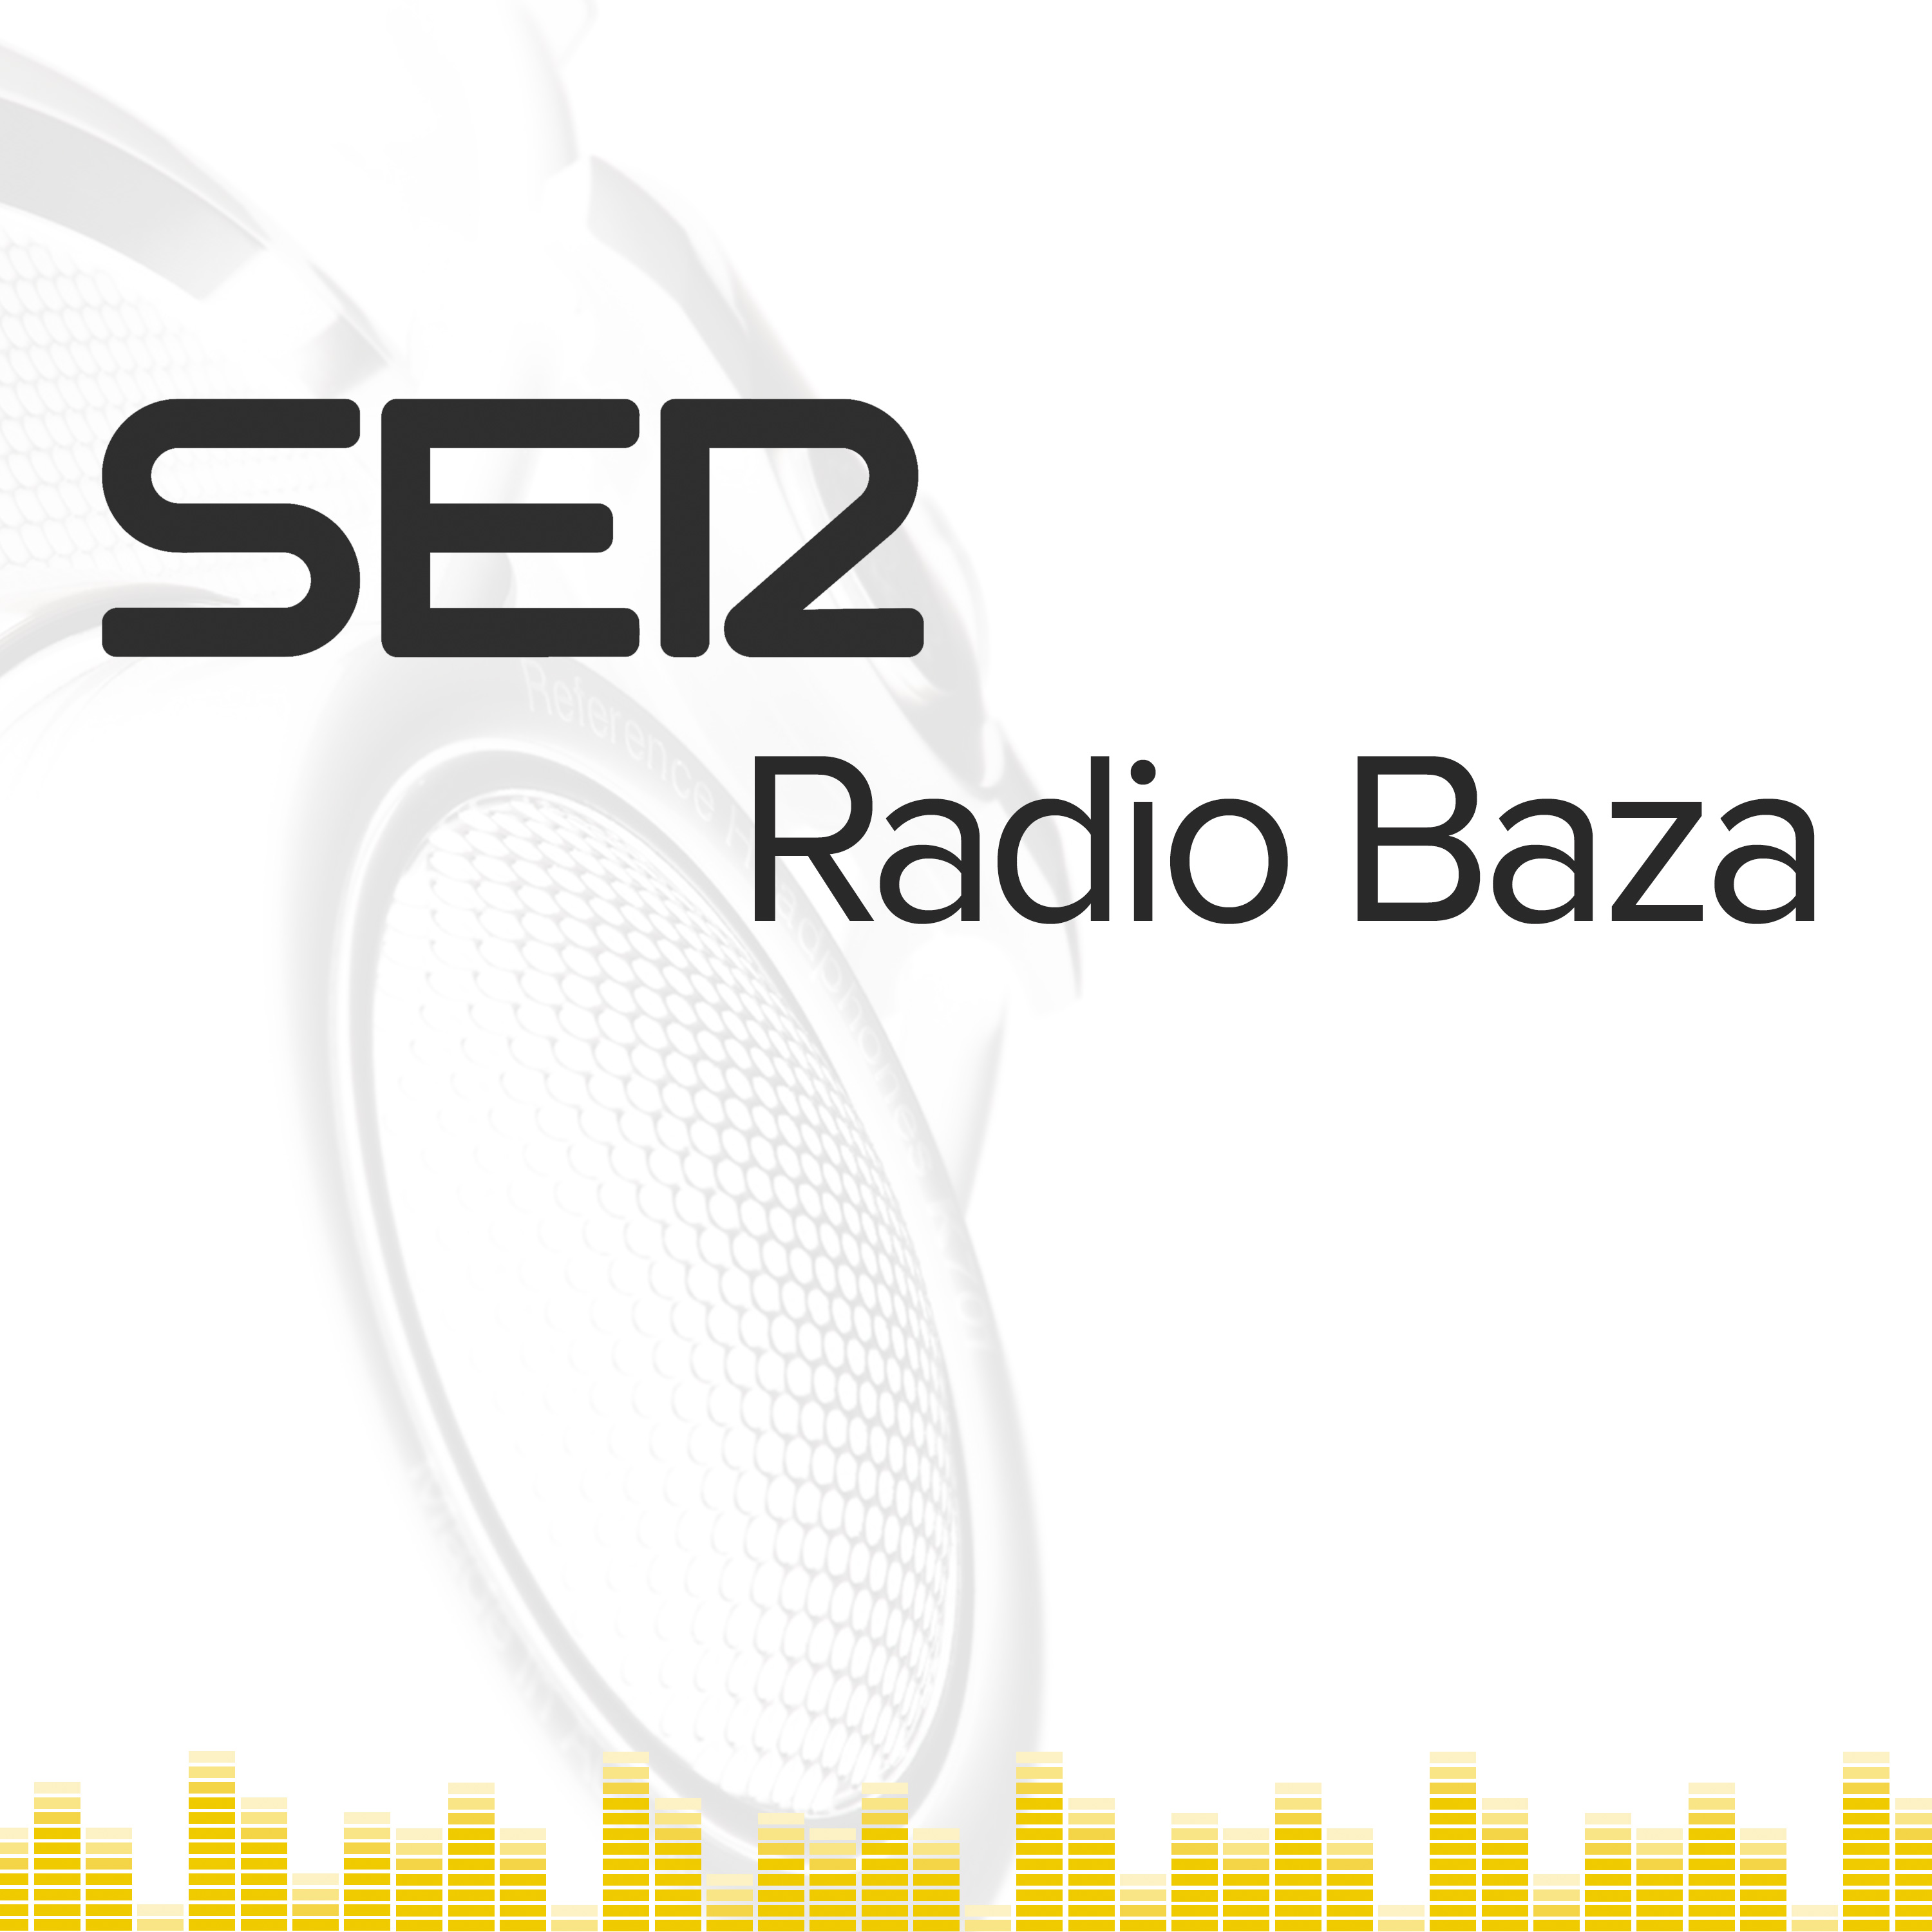 Radio Baza